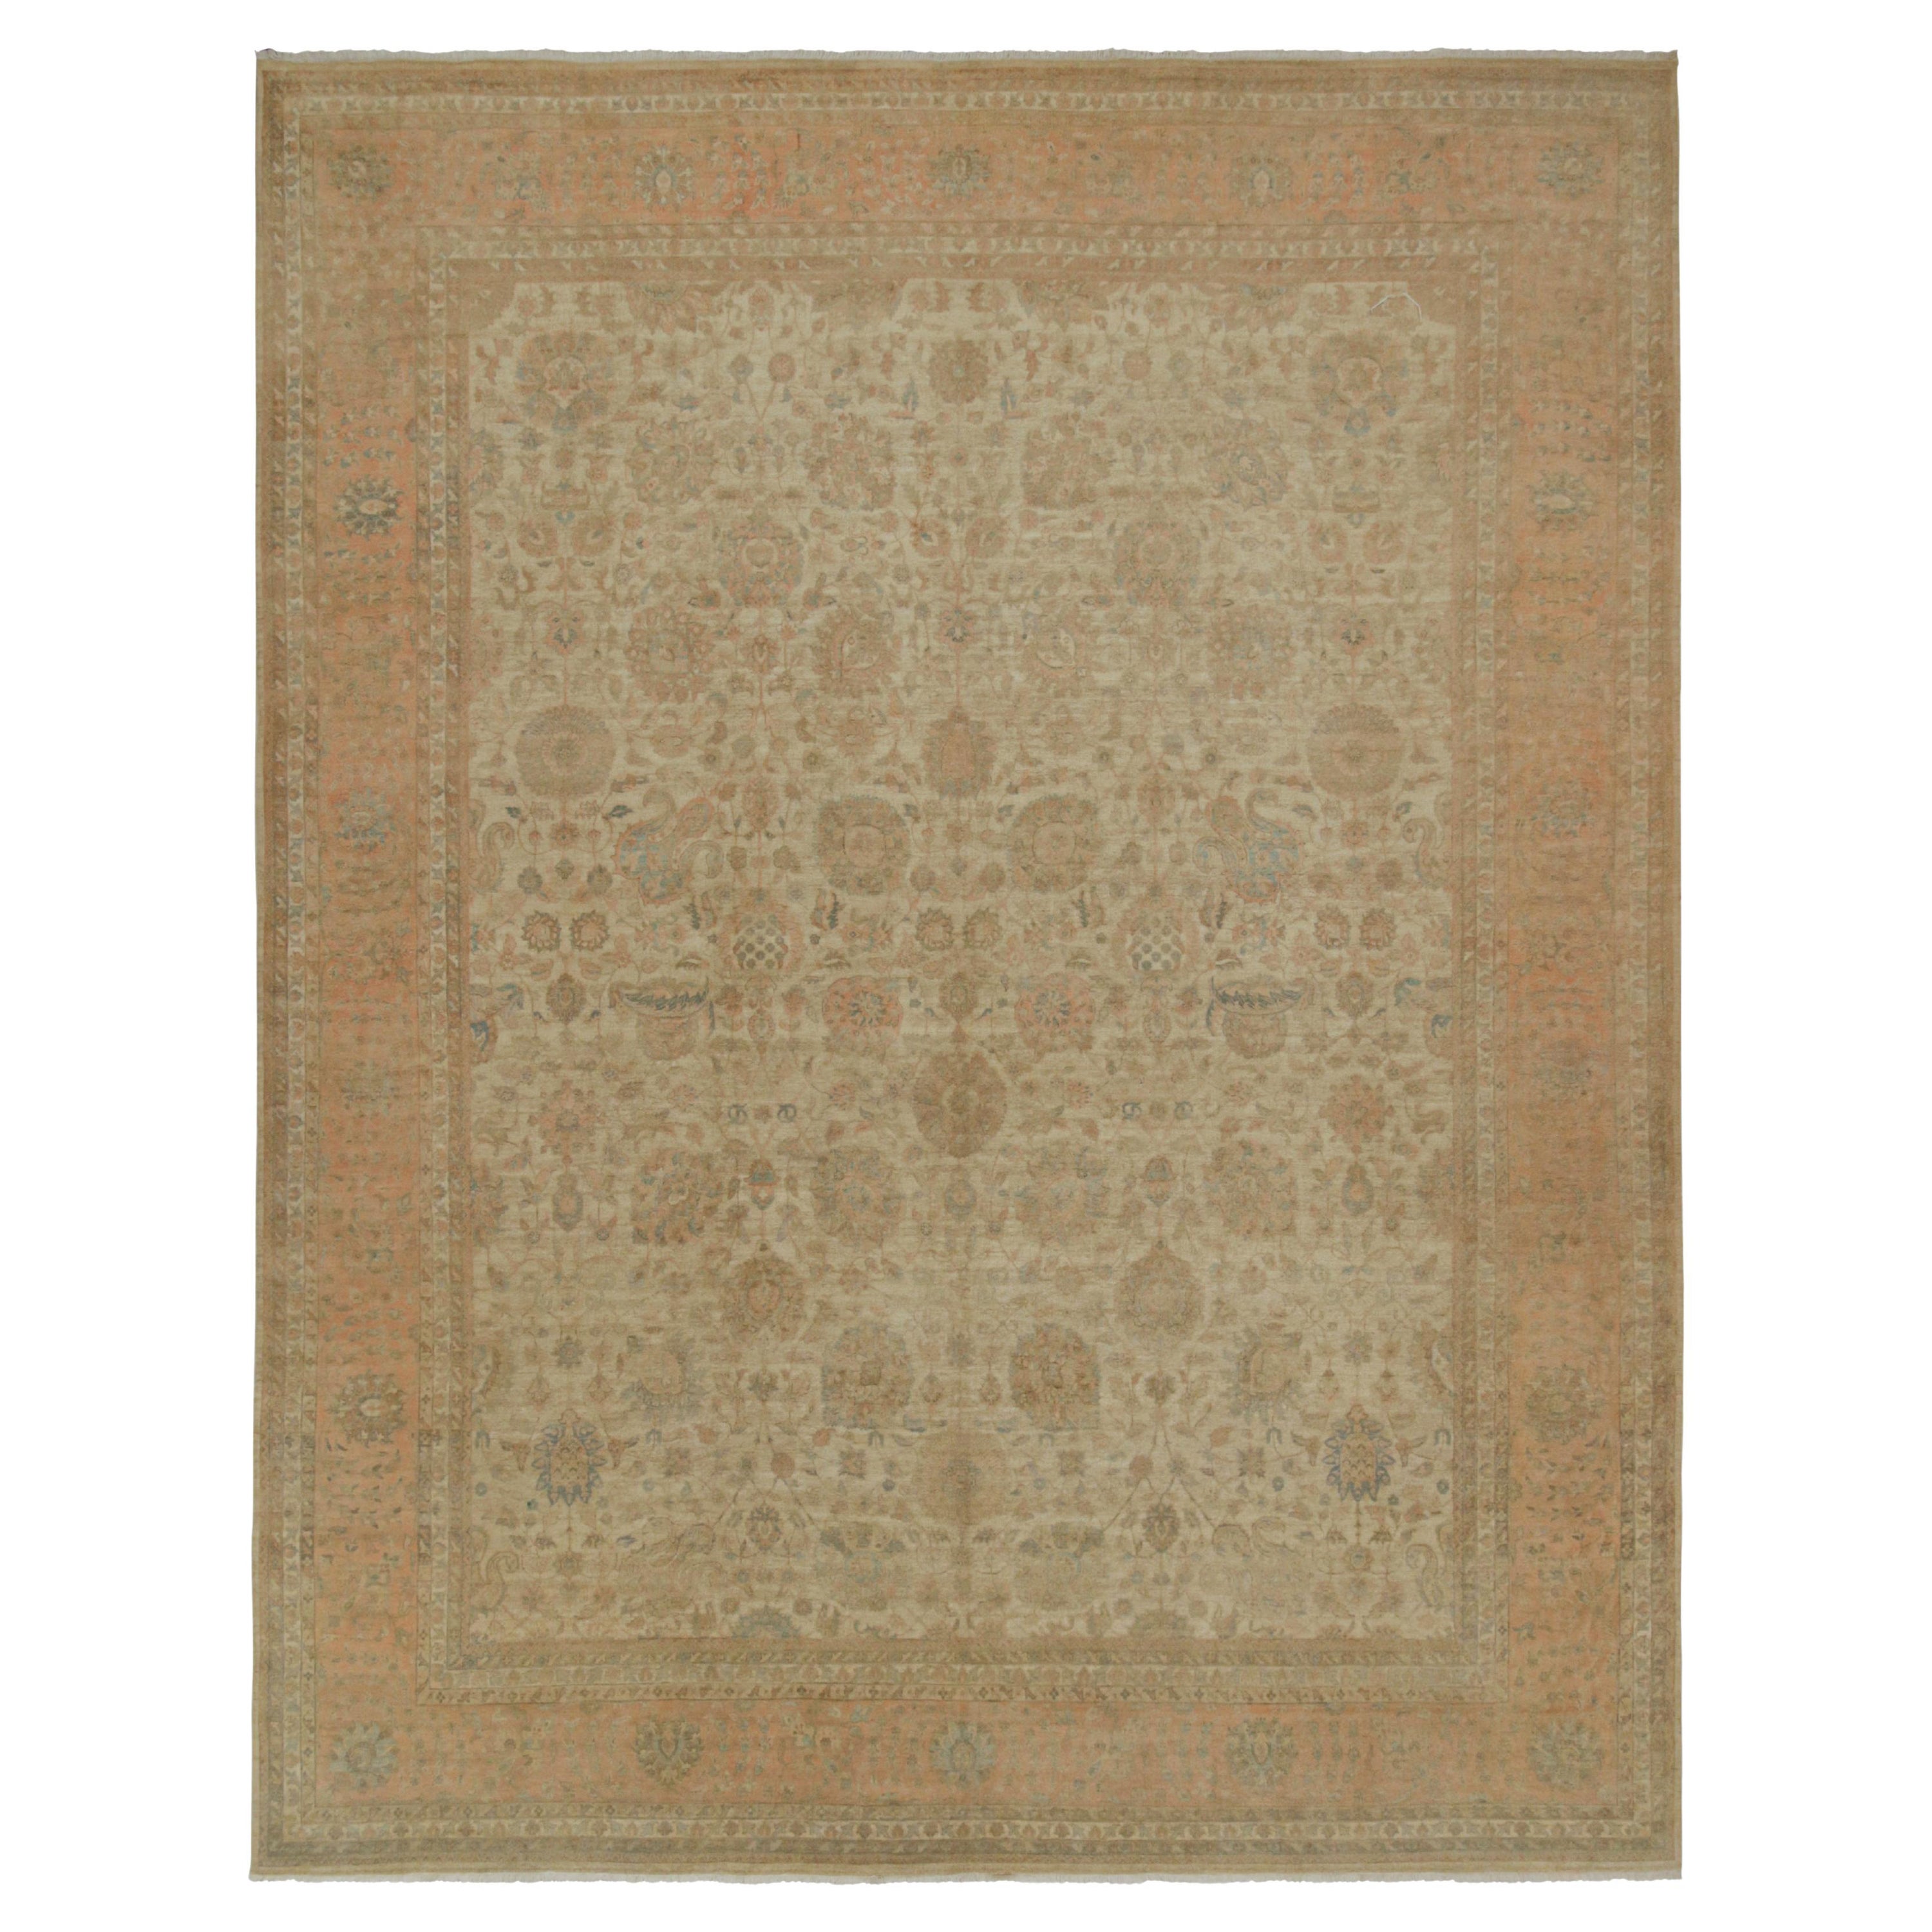 Rug & Kilim's Classic Persian Style Teppich in Brown-Beige mit rosa Blumenmustern